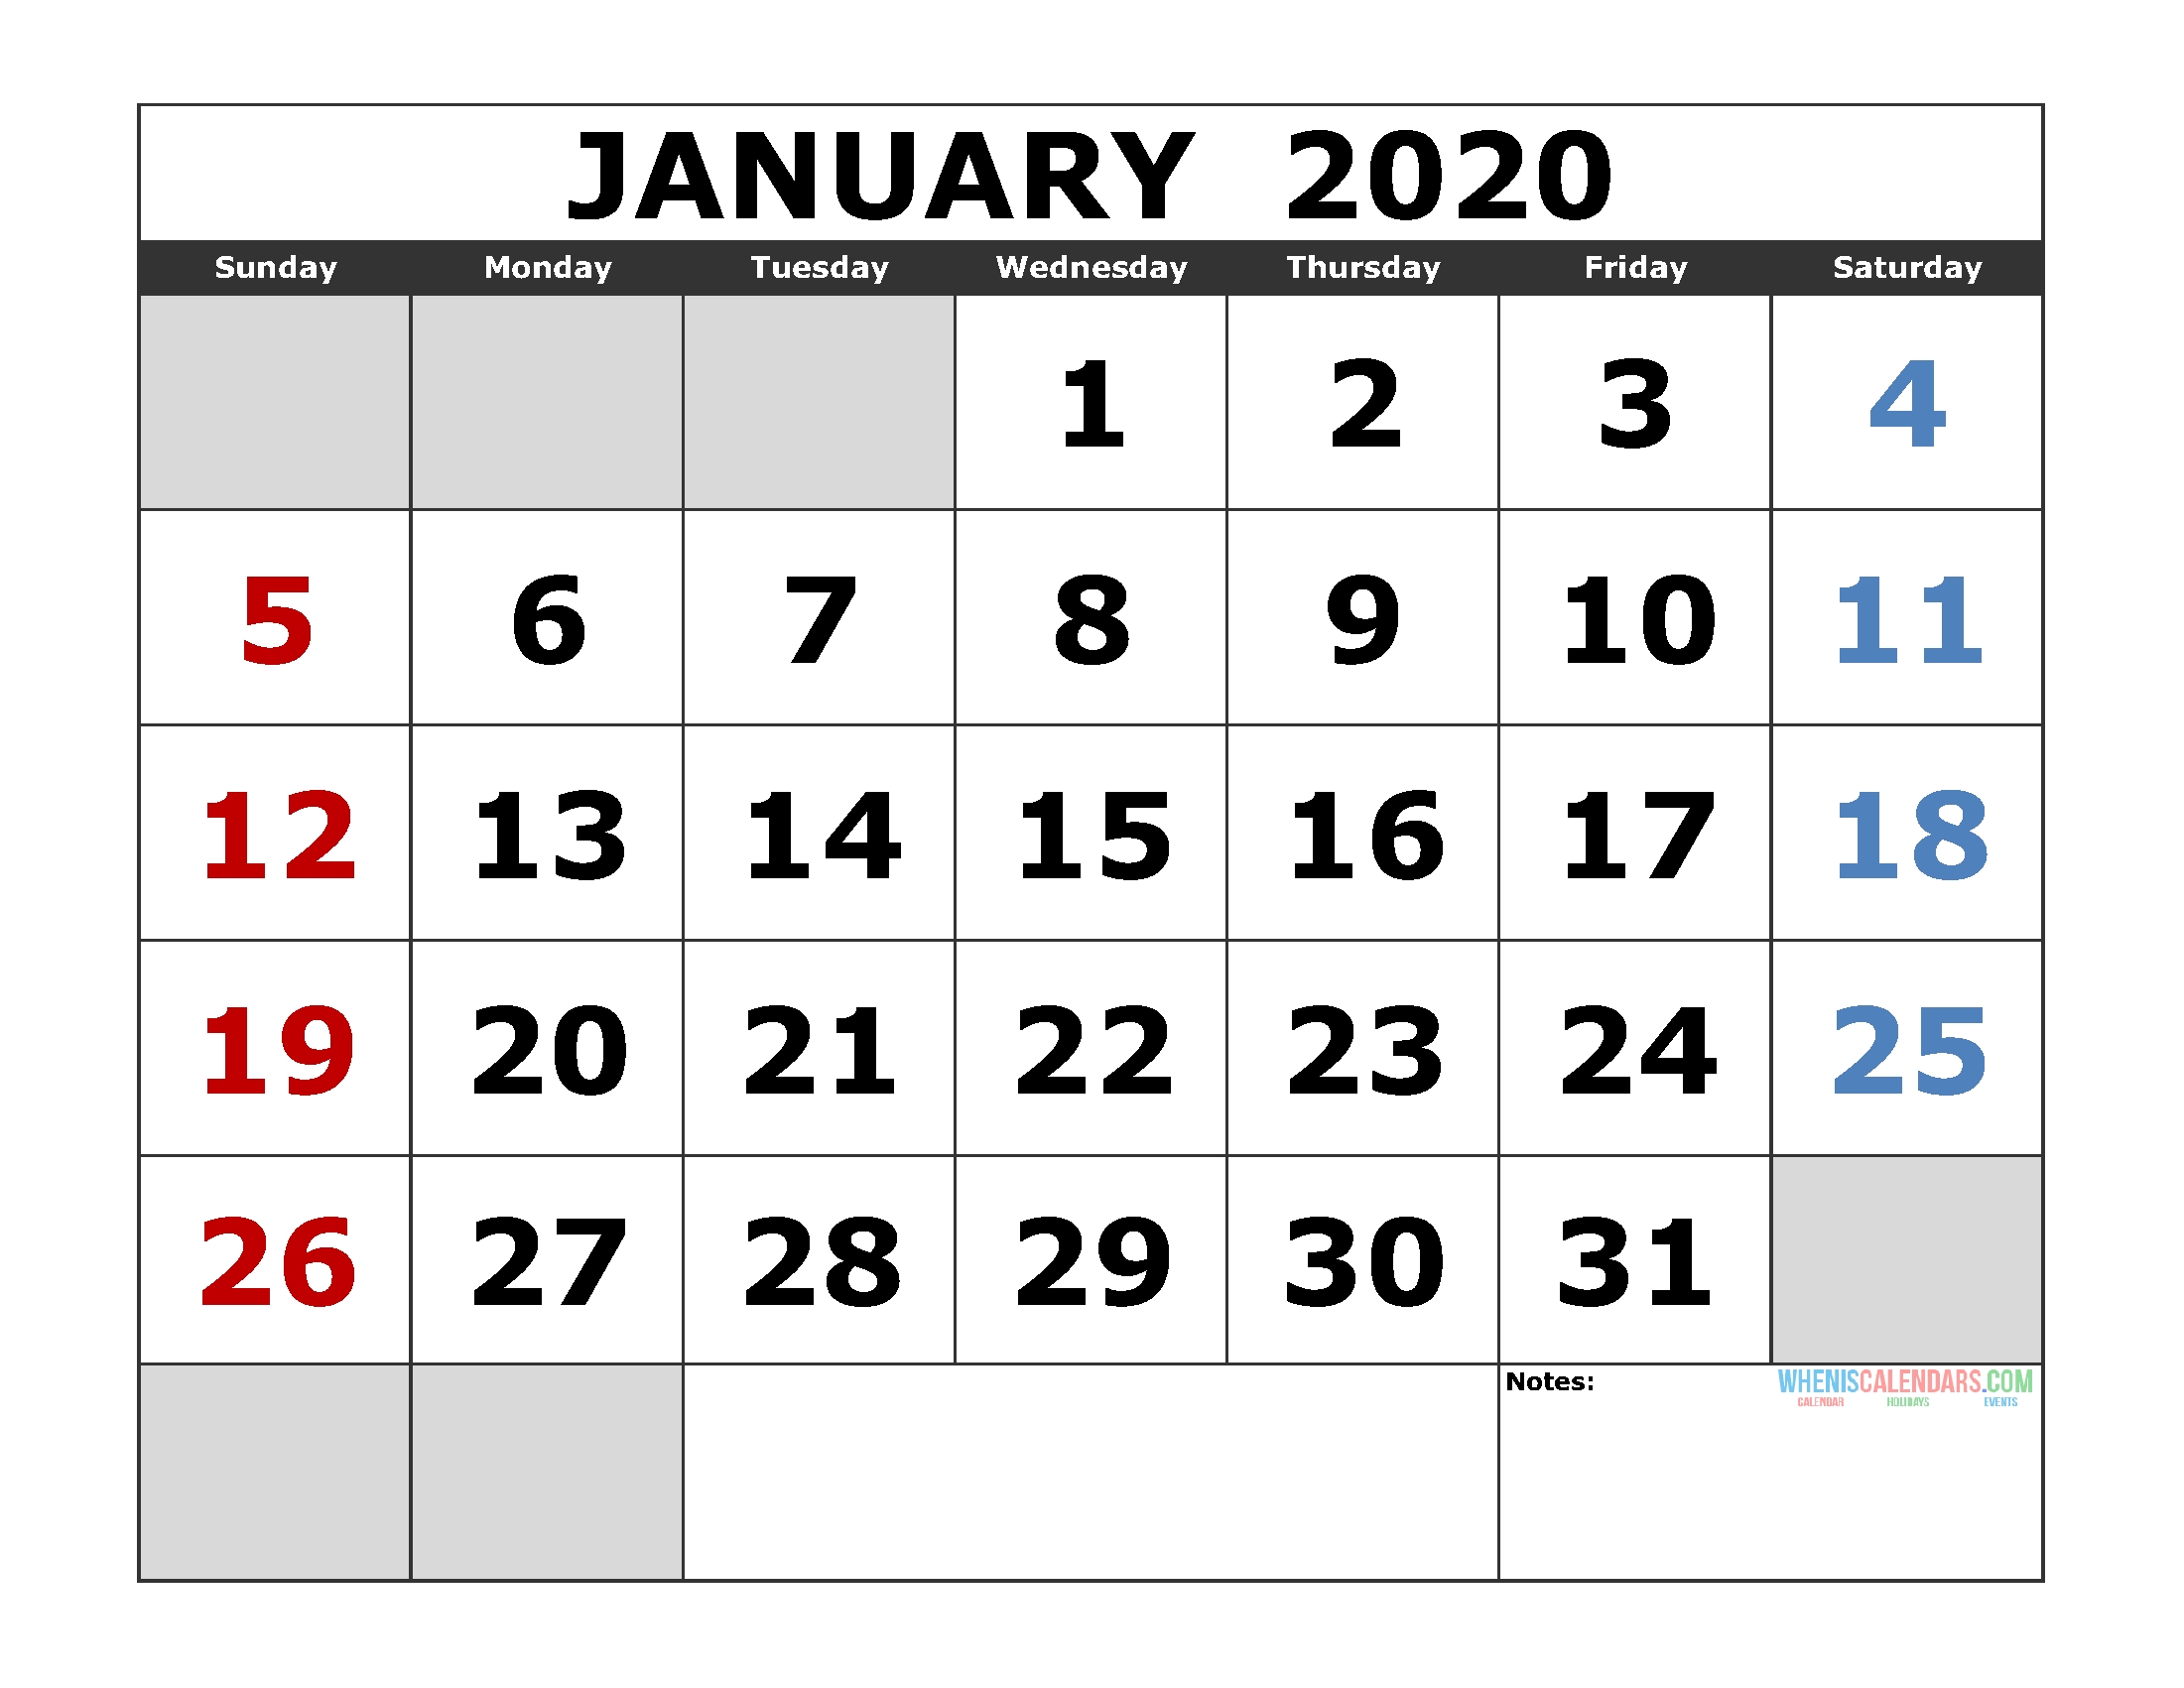 January 2020 Printable Calendar Template Excel, Pdf, Image